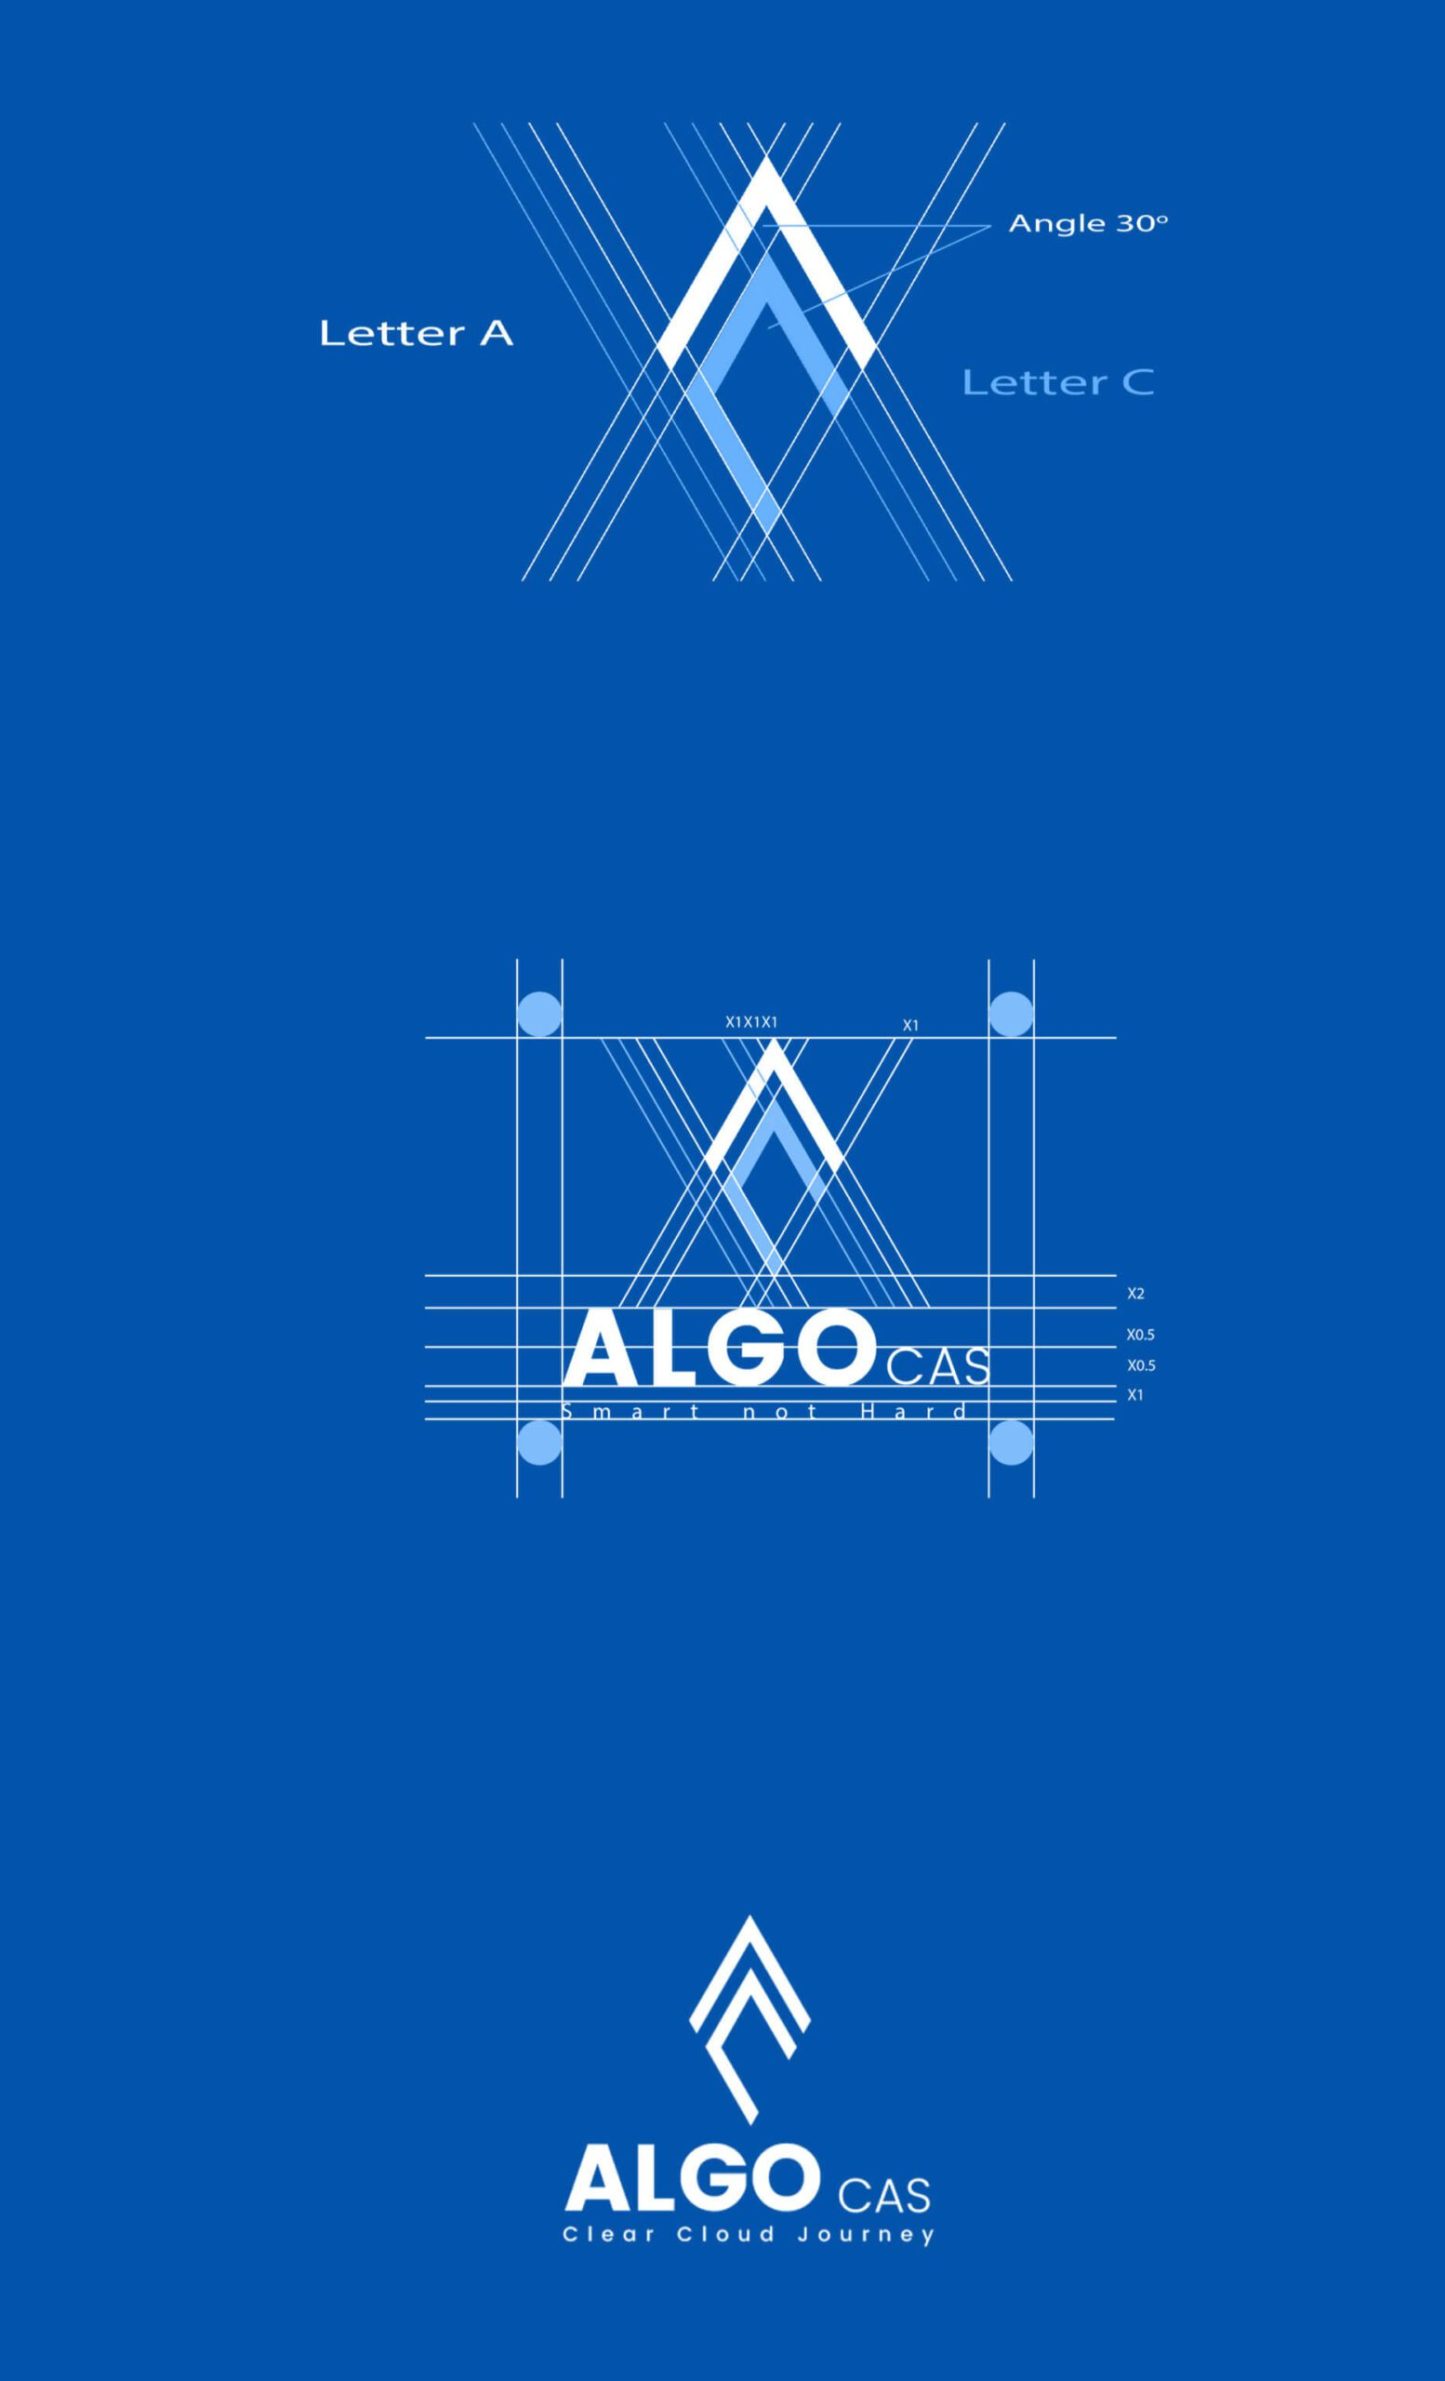 Algo Gas Corporate Identity